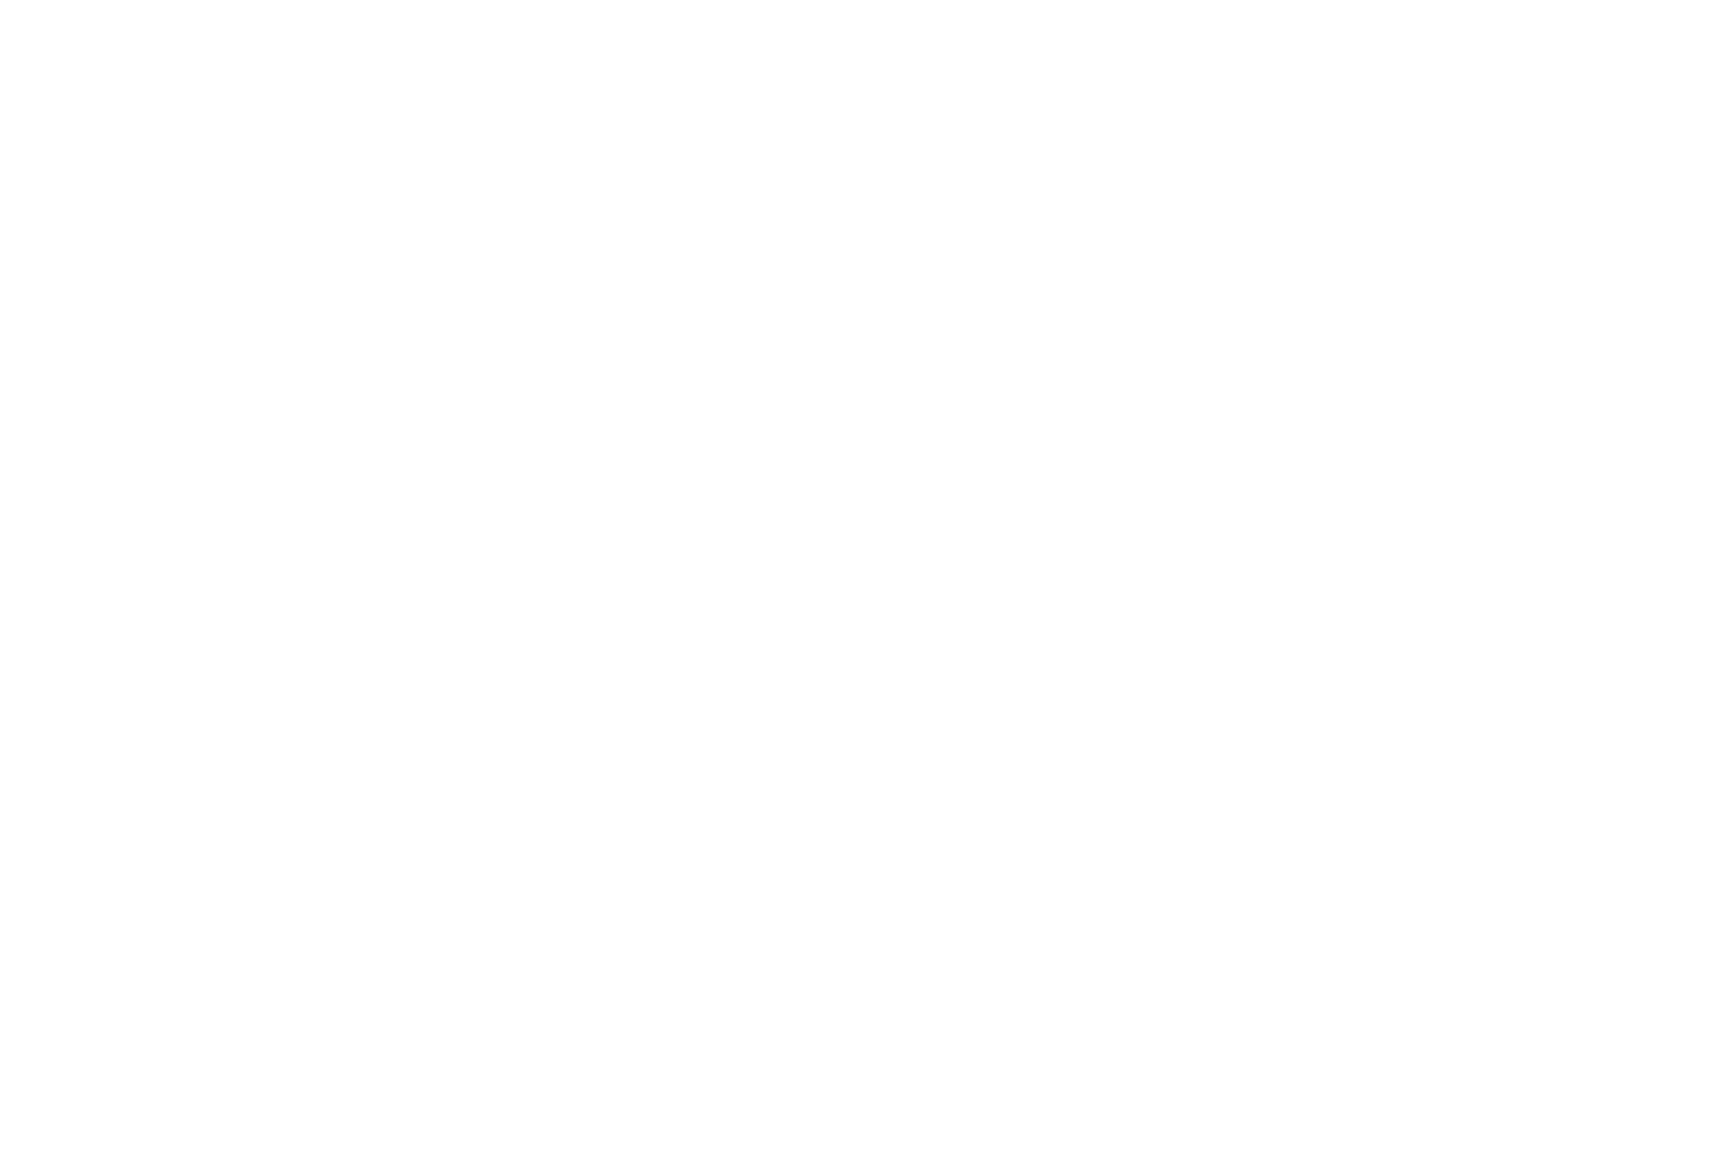 MUSIC VIDEO - SILVER - Virgin Spring Cinefest - 2020